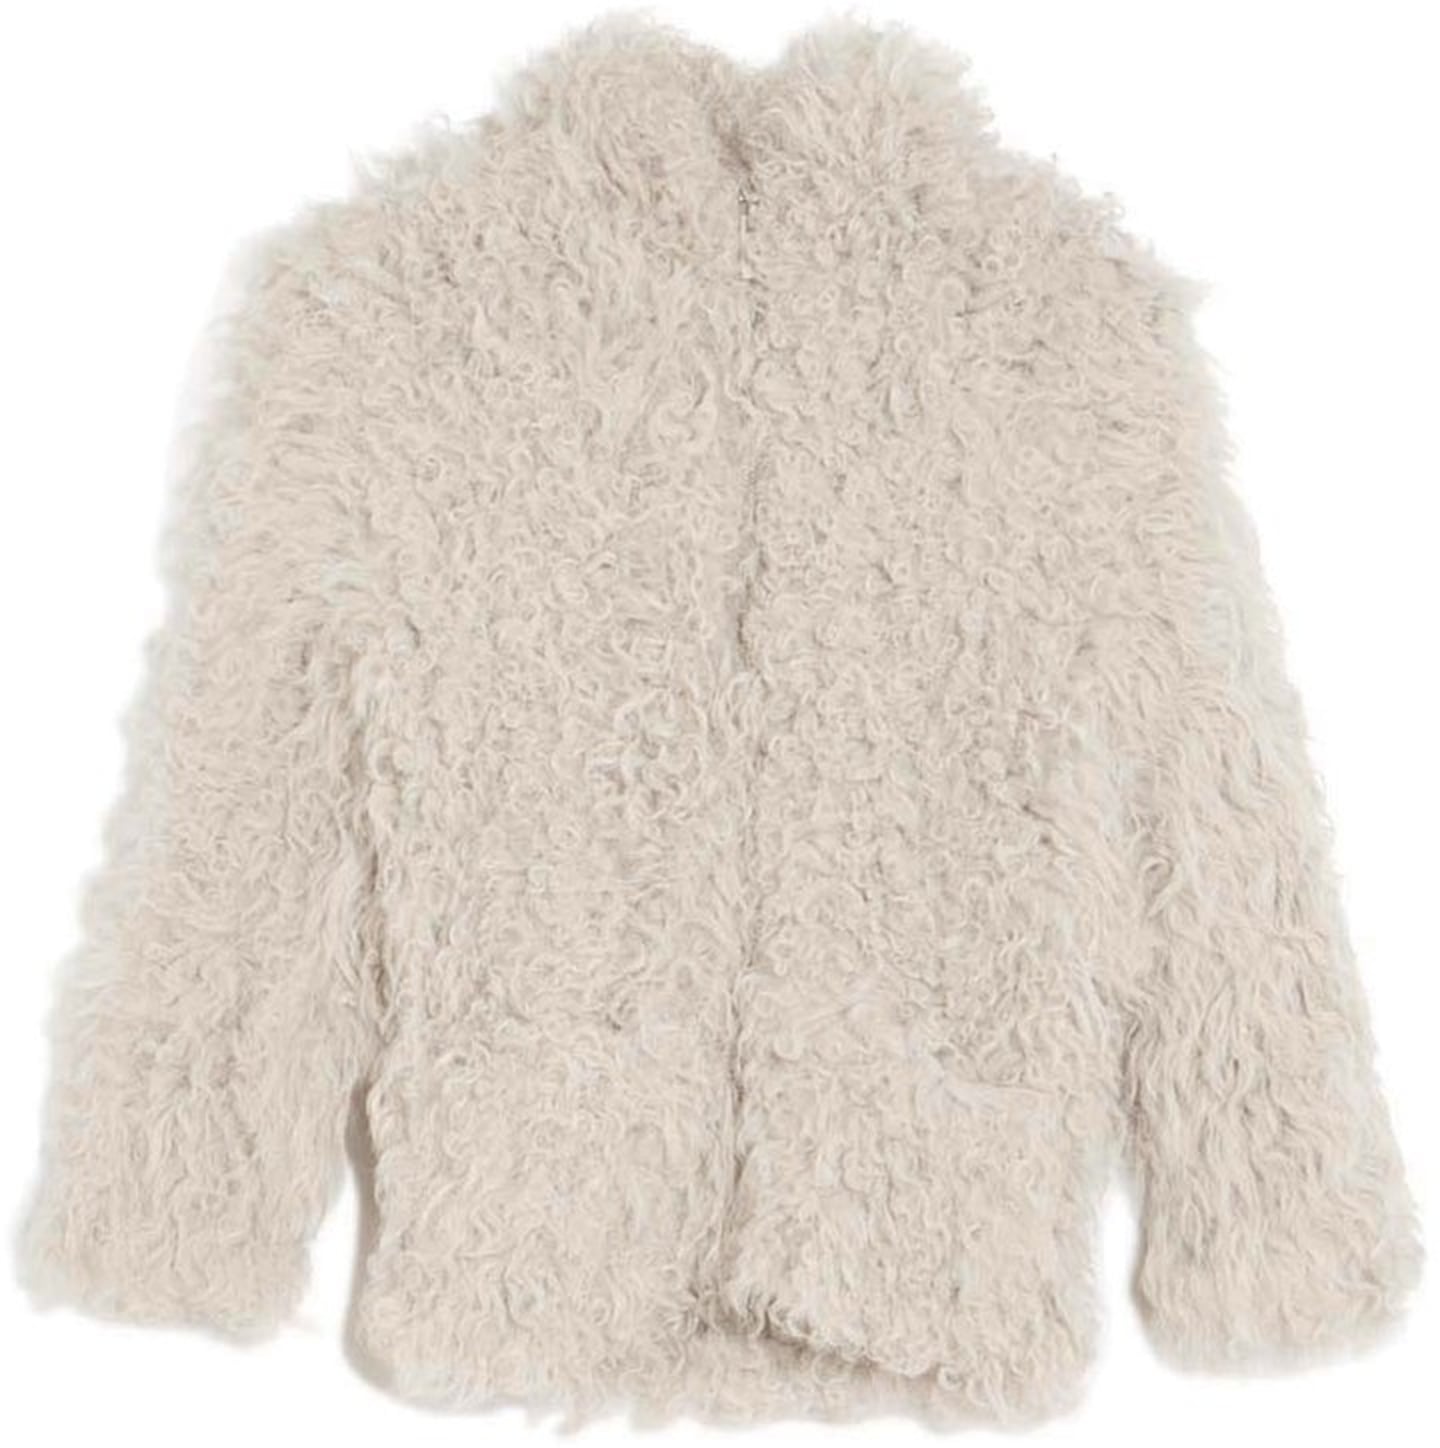 Kendall Jenner Wearing Shearling Jacket | POPSUGAR Fashion